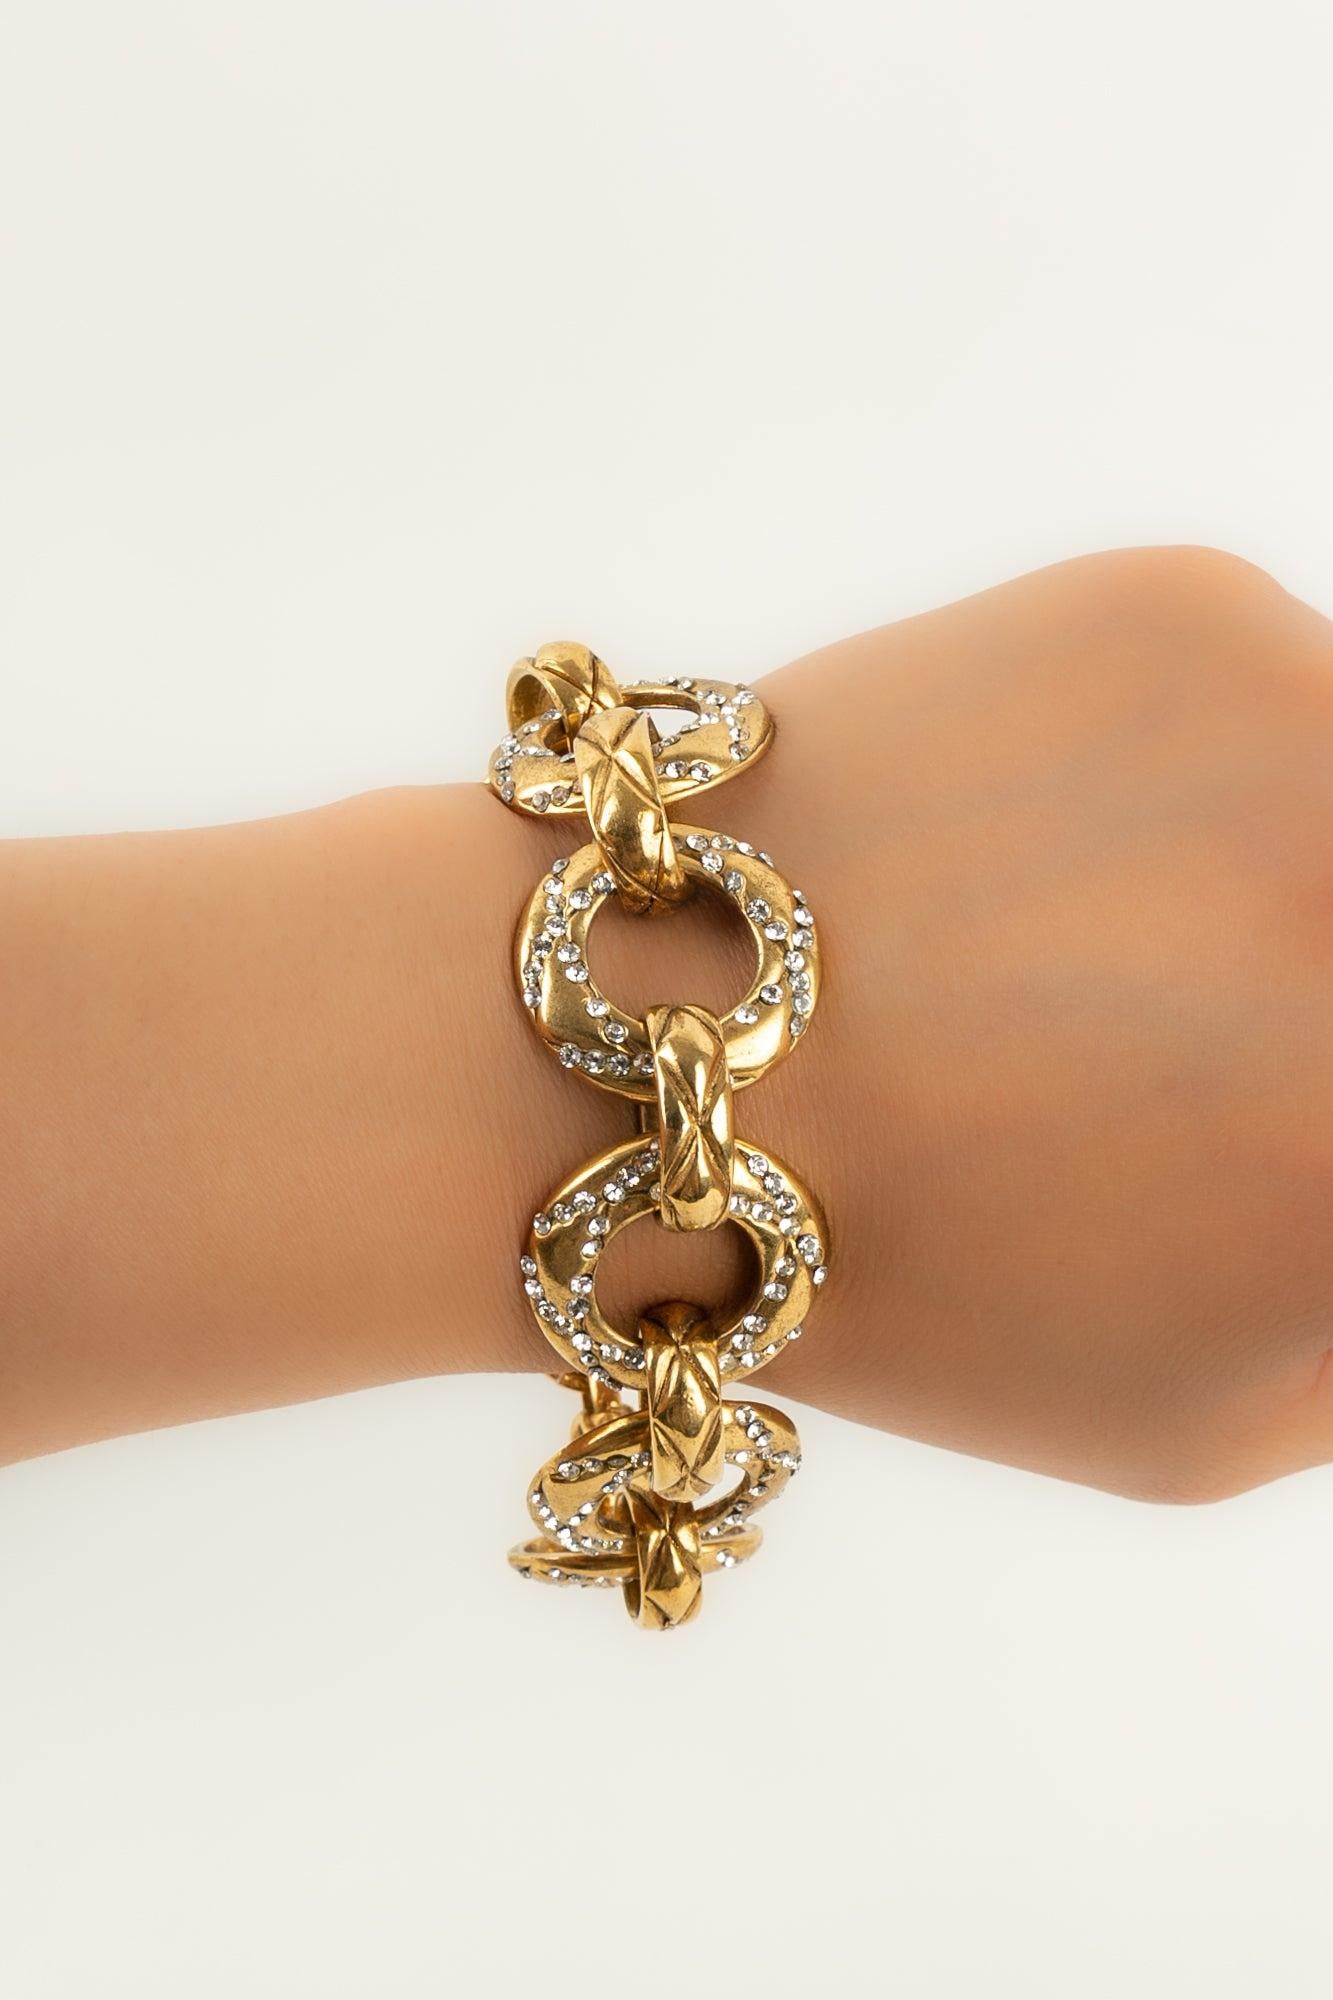 Chanel Golden Bracelet in Golden Metal with Swarovski Rhinestones, 2003 For Sale 3